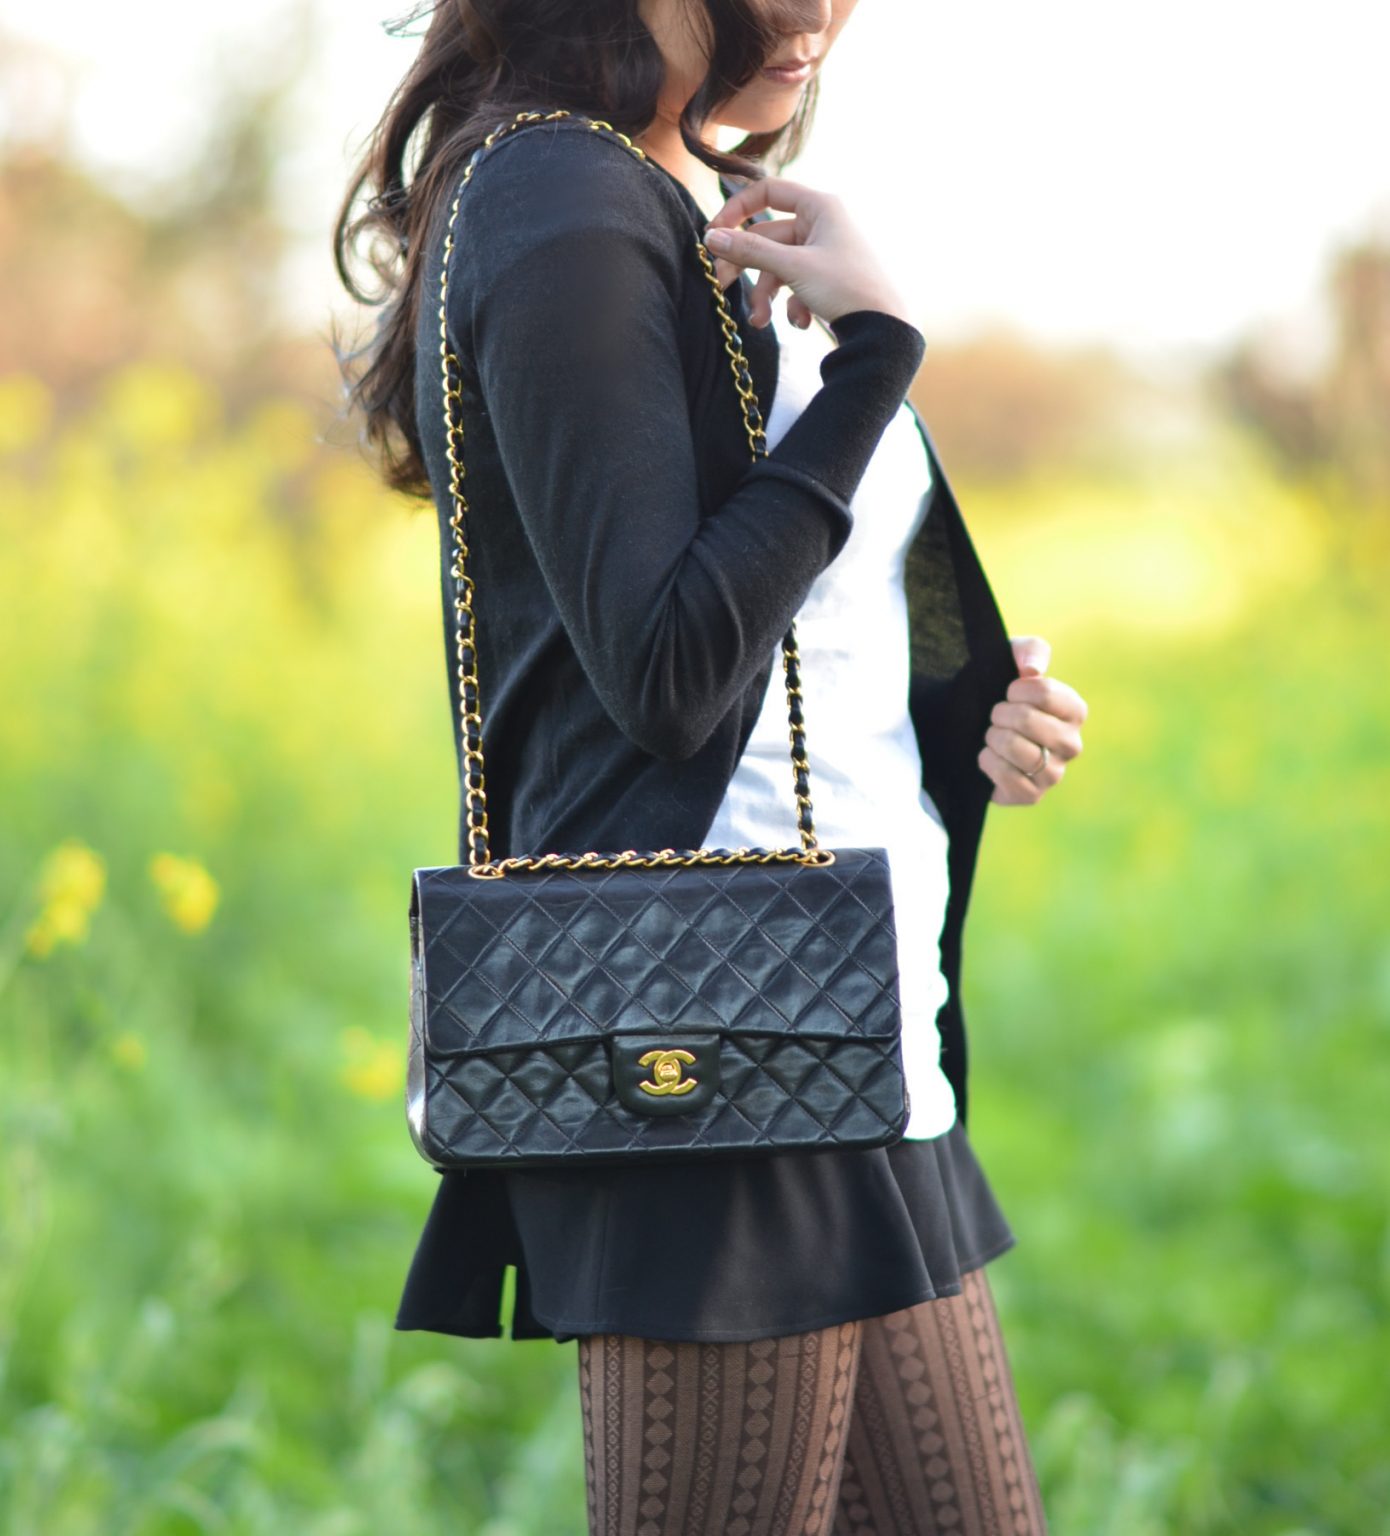 Chanel Bag Black 2.55